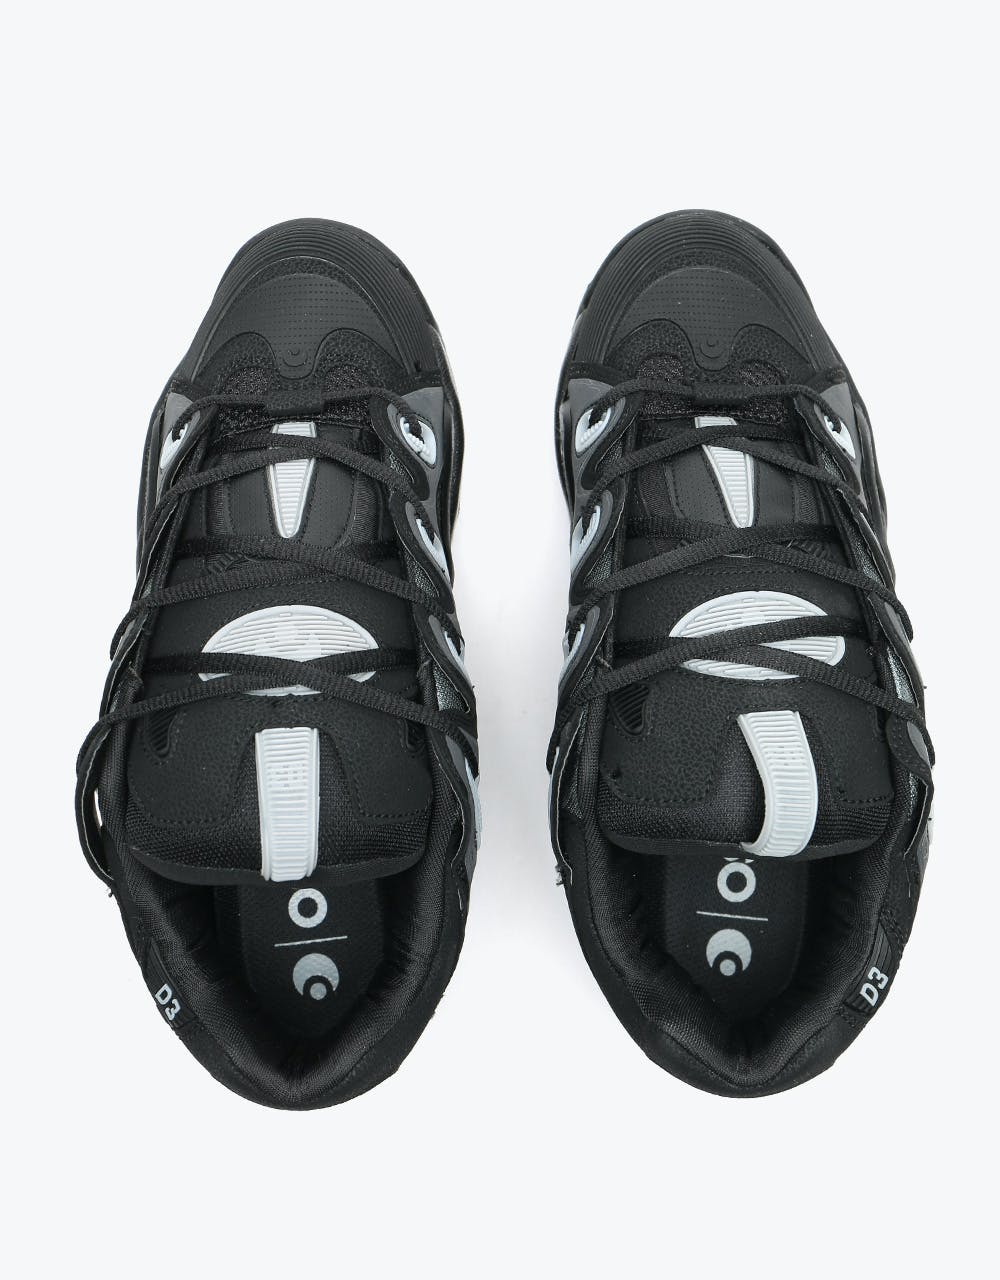 Osiris D3 2001 Skate Shoes - Black/Light Grey/Fade